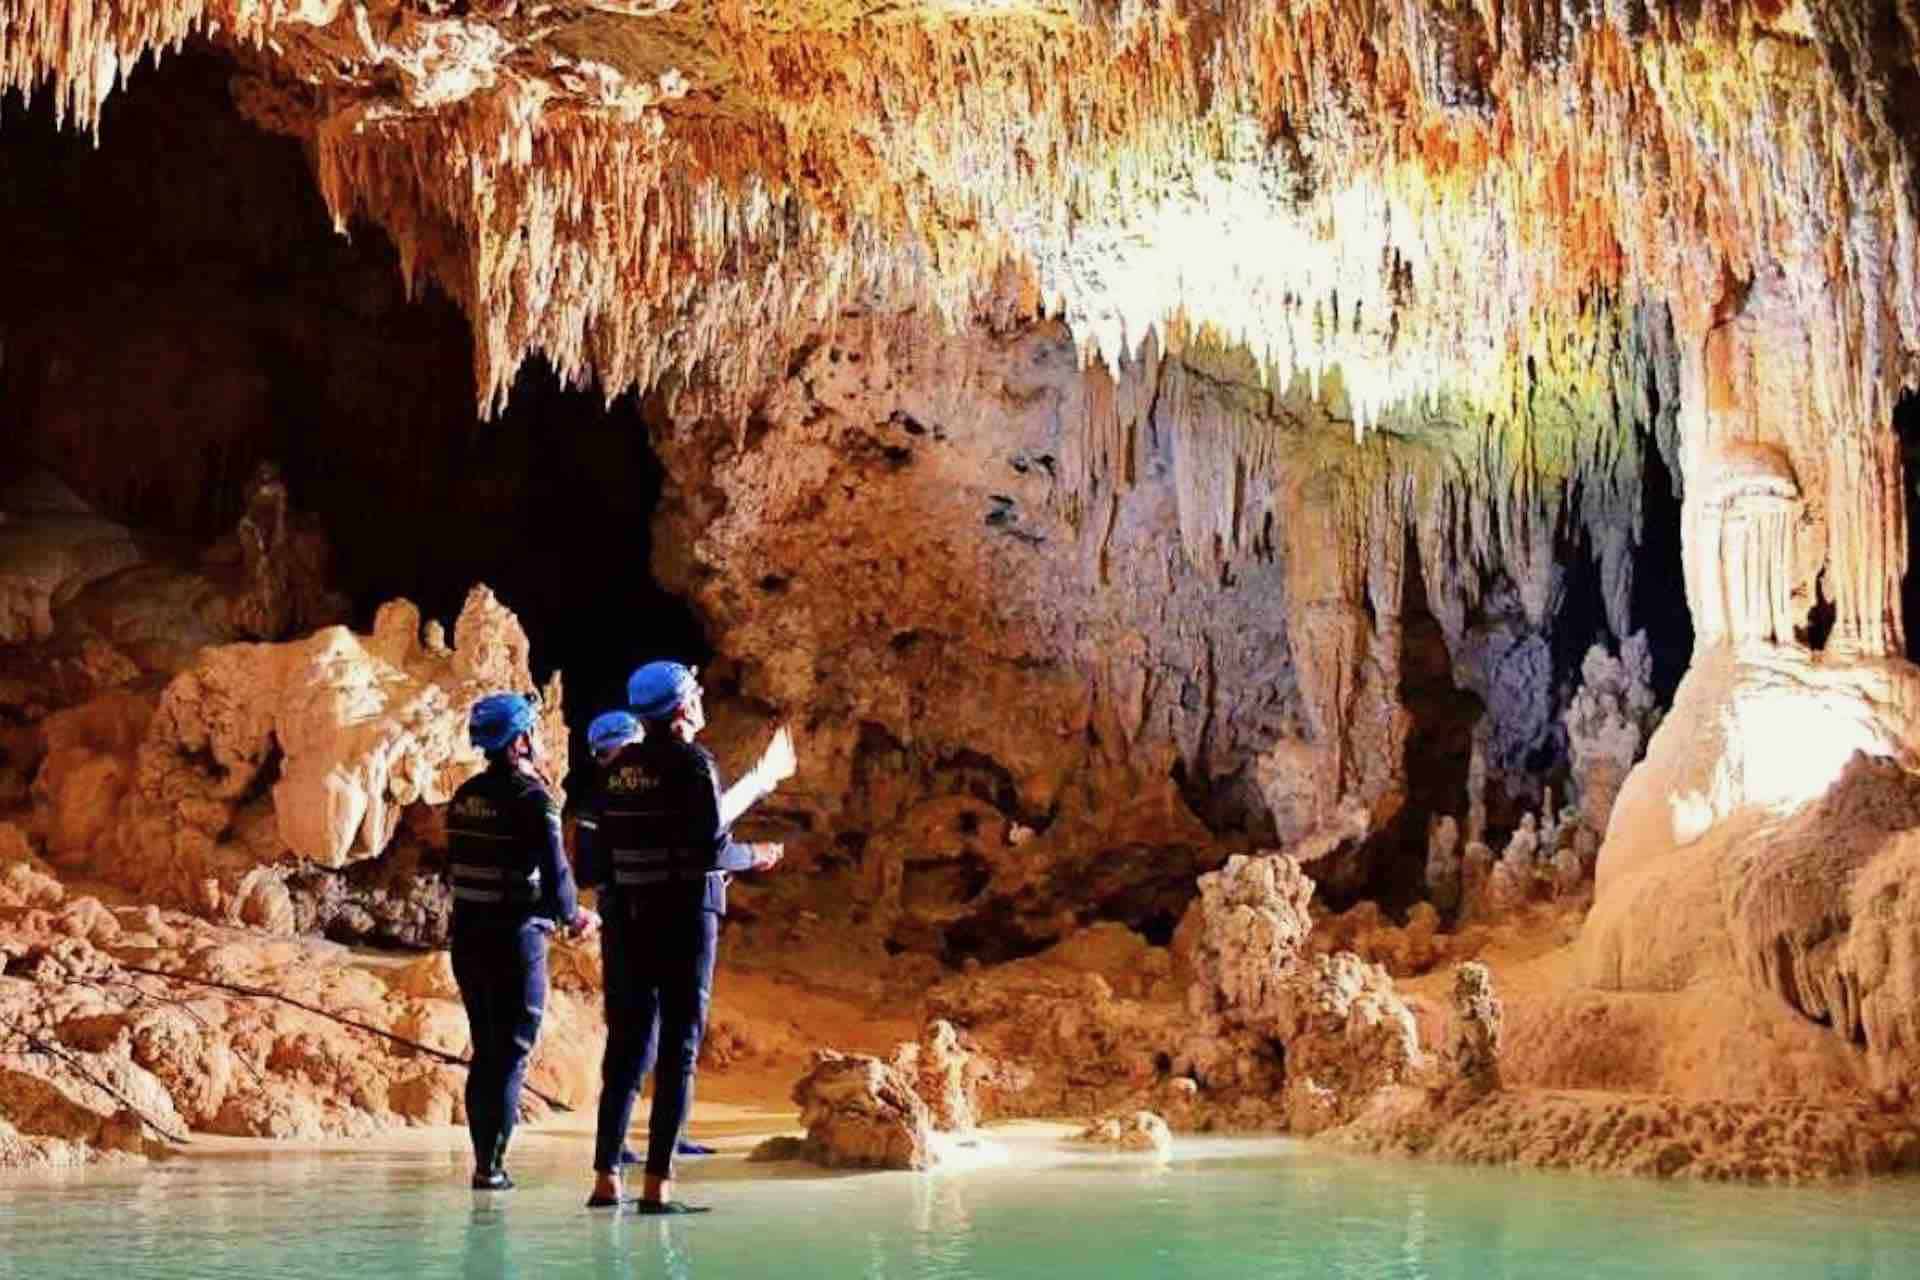 ATV Playa del Carmen Secret Caves tour guests